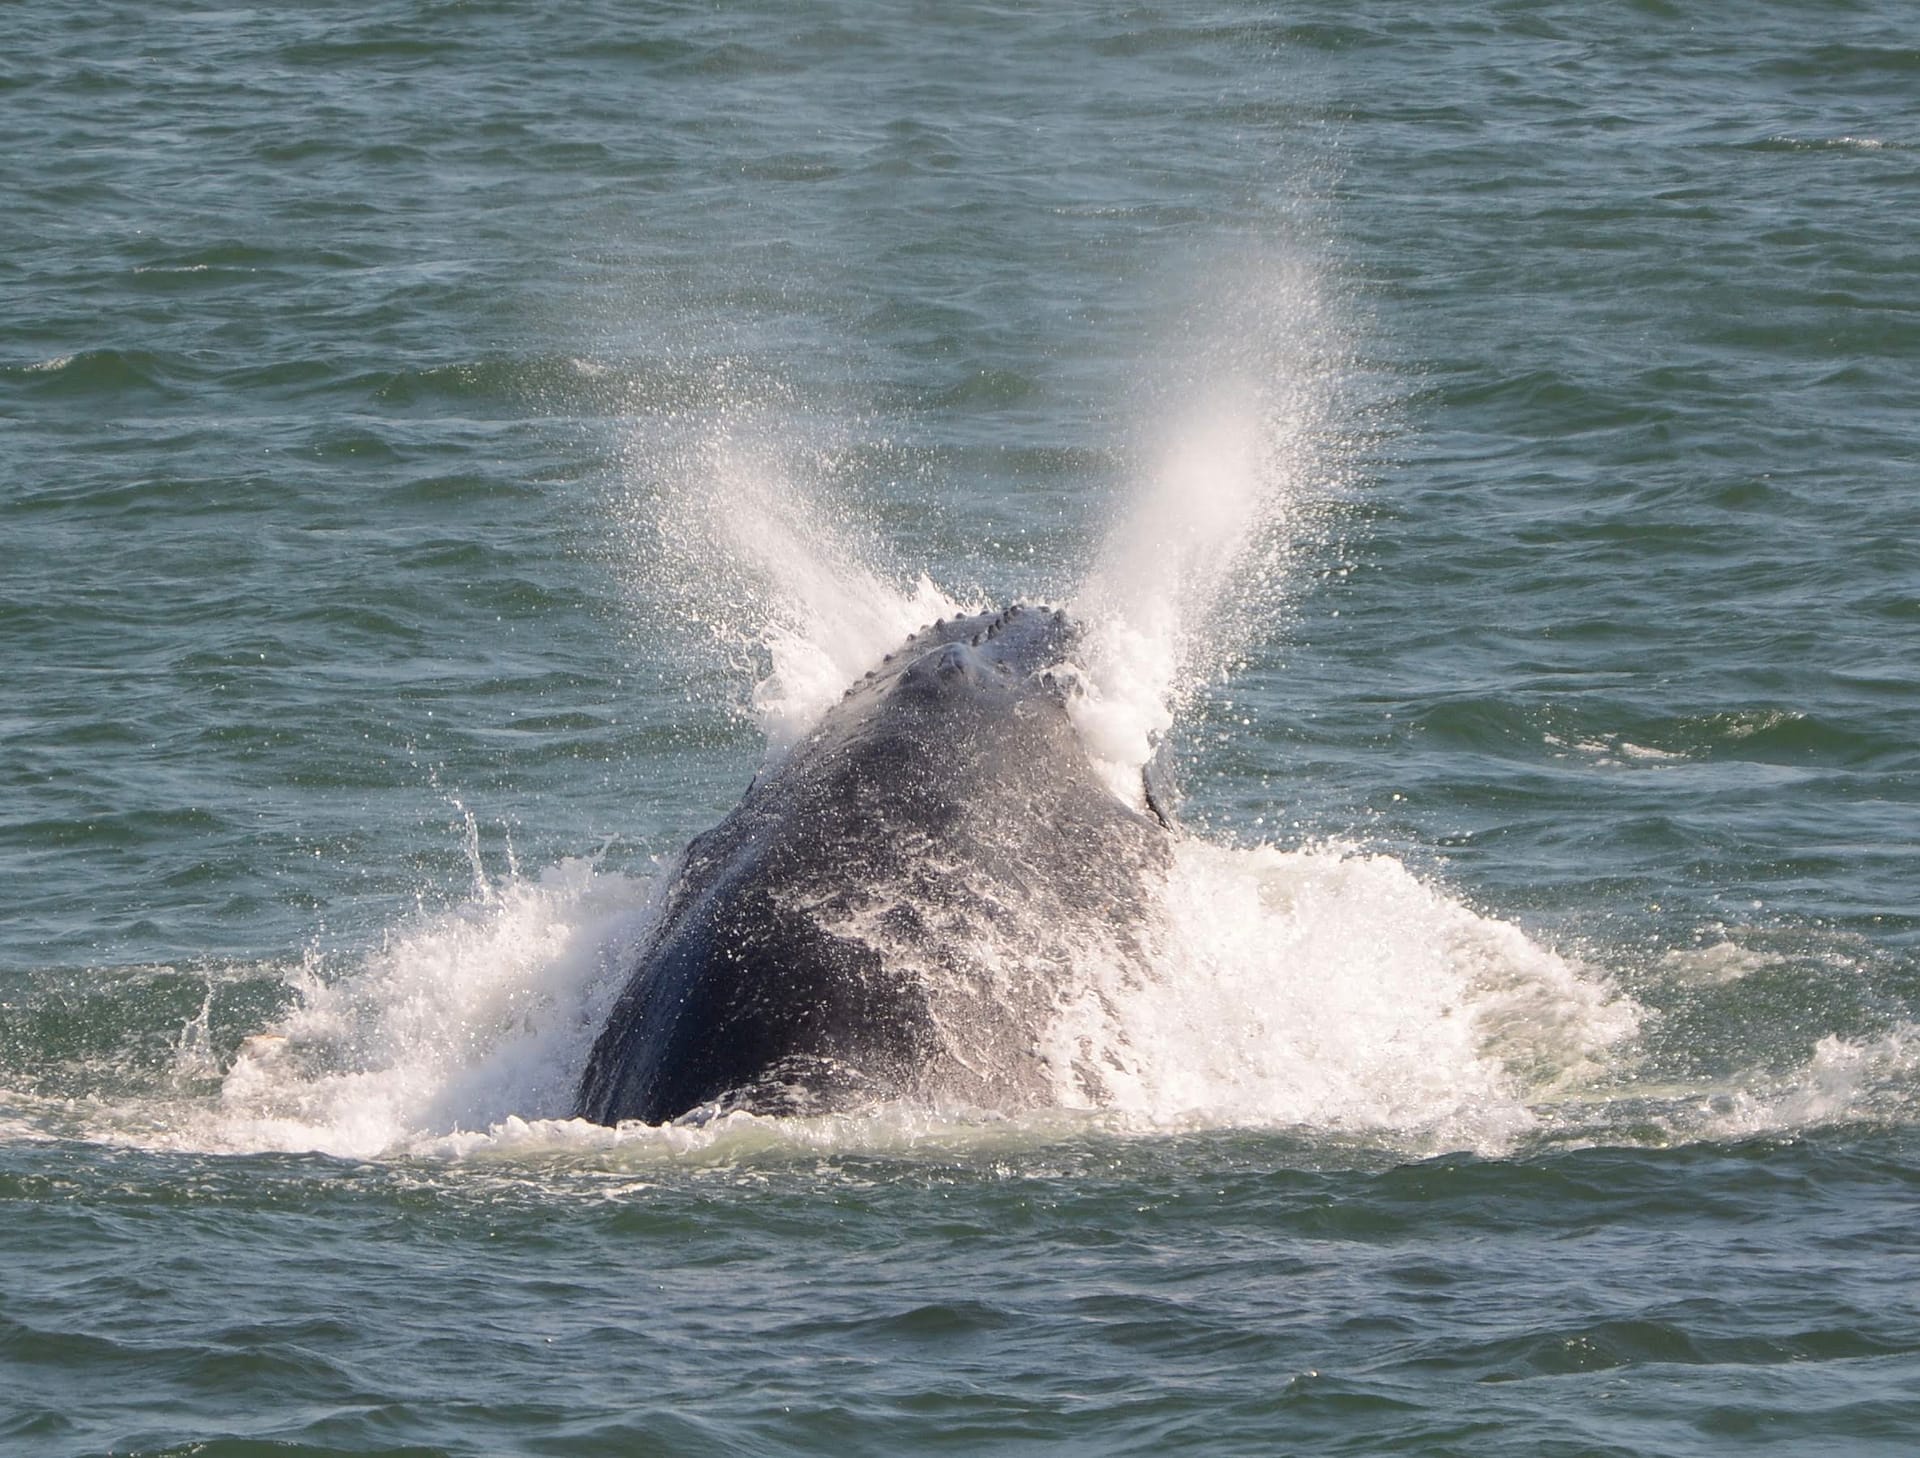 Humpback Whale 16 lunge feeding on bunker